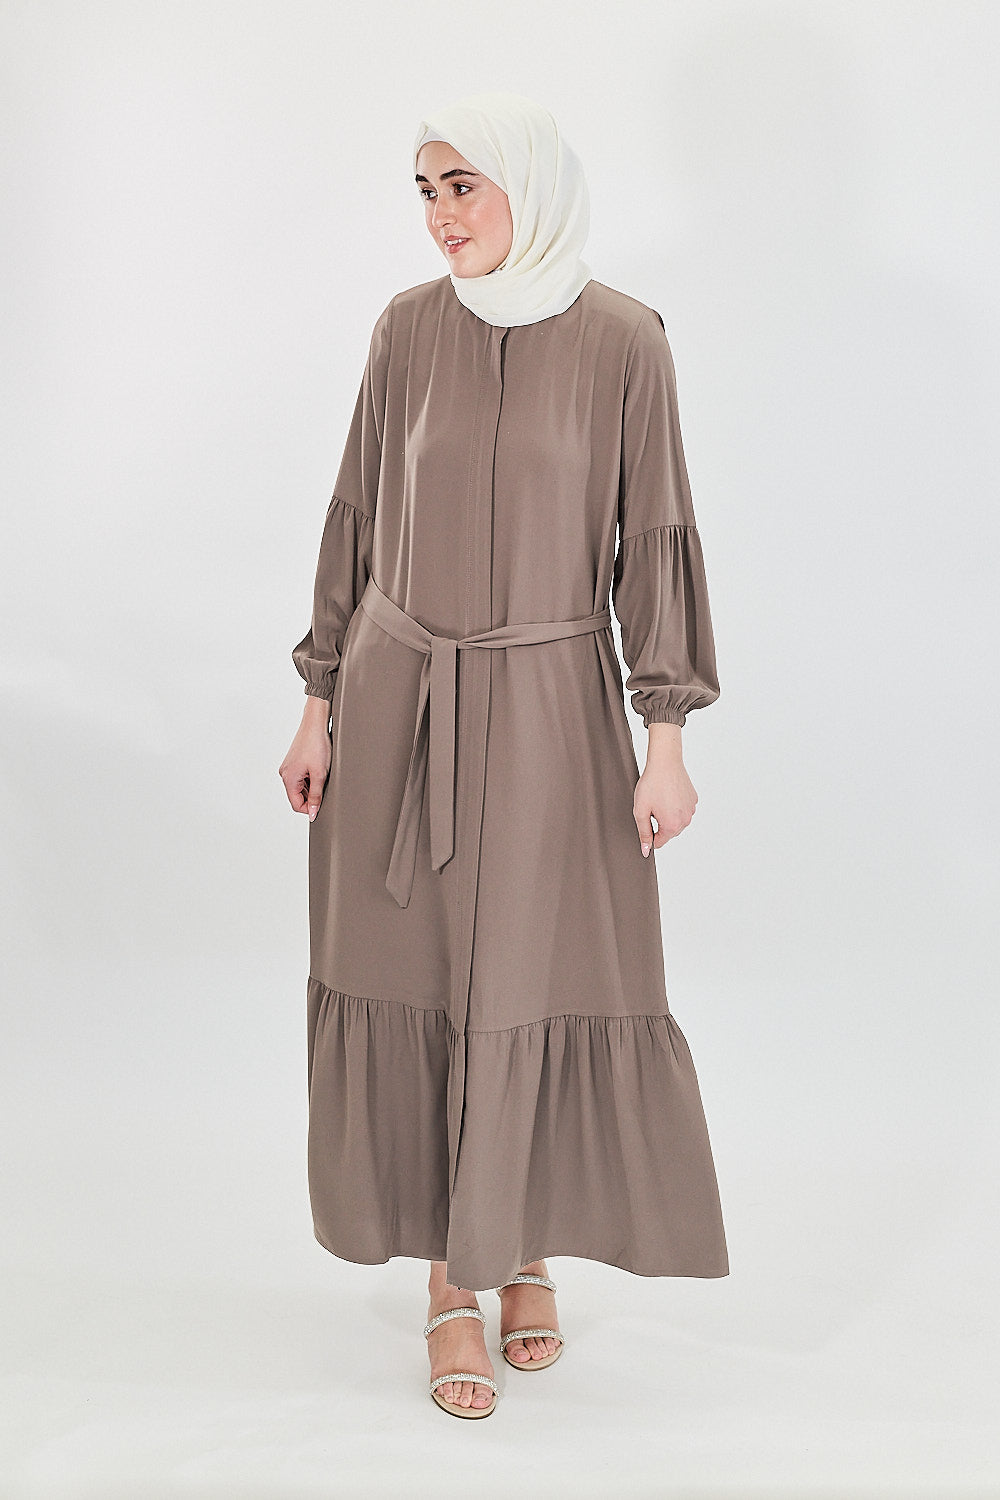 Dana Fashion  Elegant Modest Fashion & Islamic Clothing